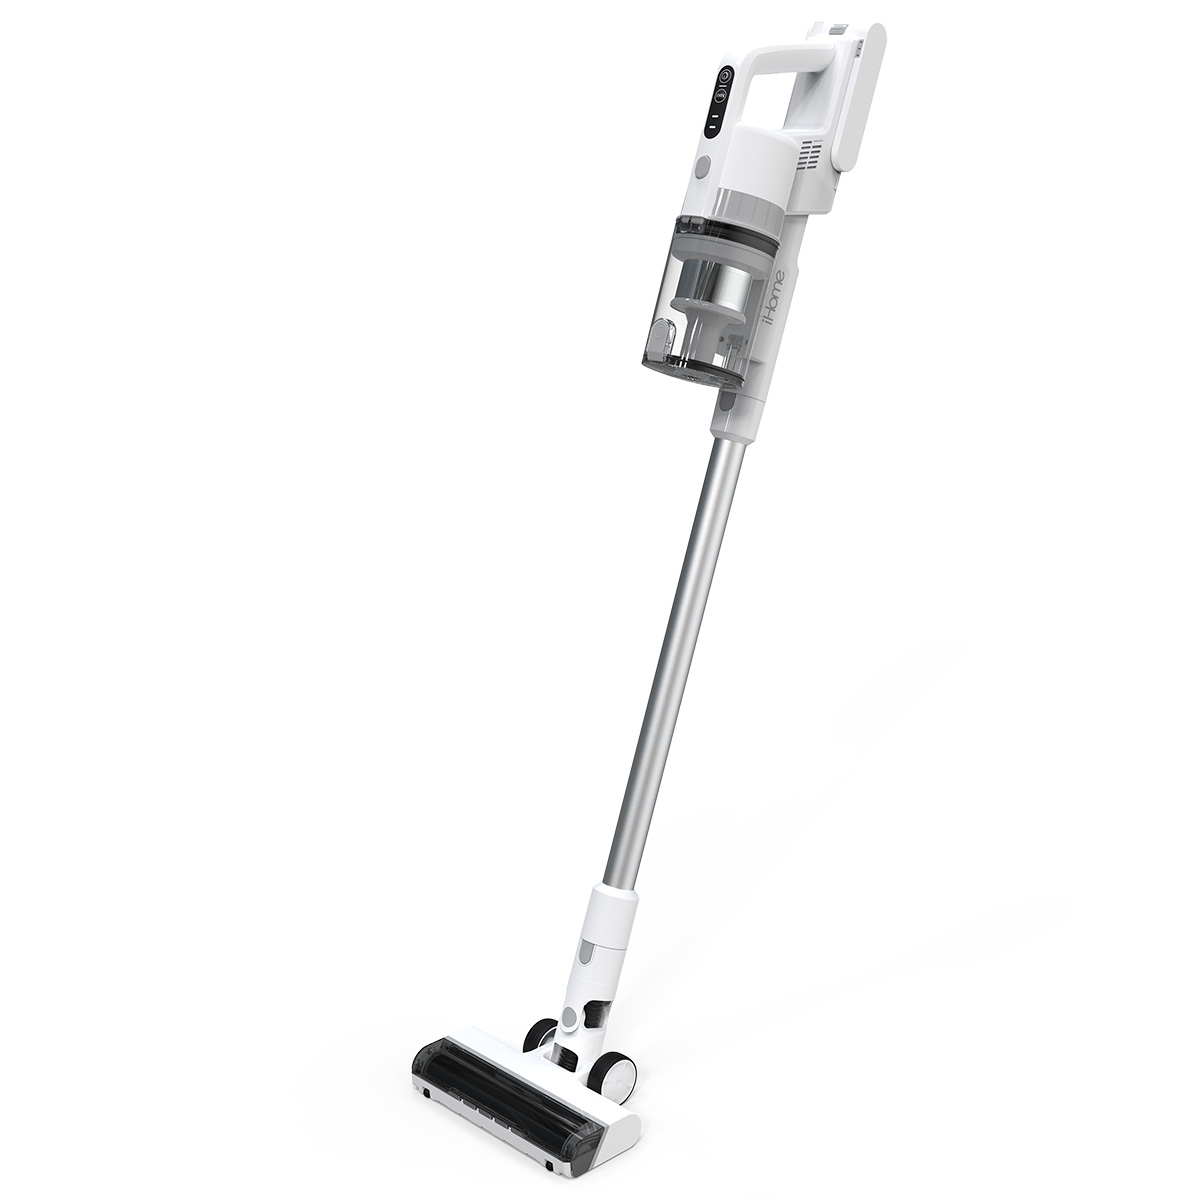 iHome Cordless 2-in-1 Stick Vacuum